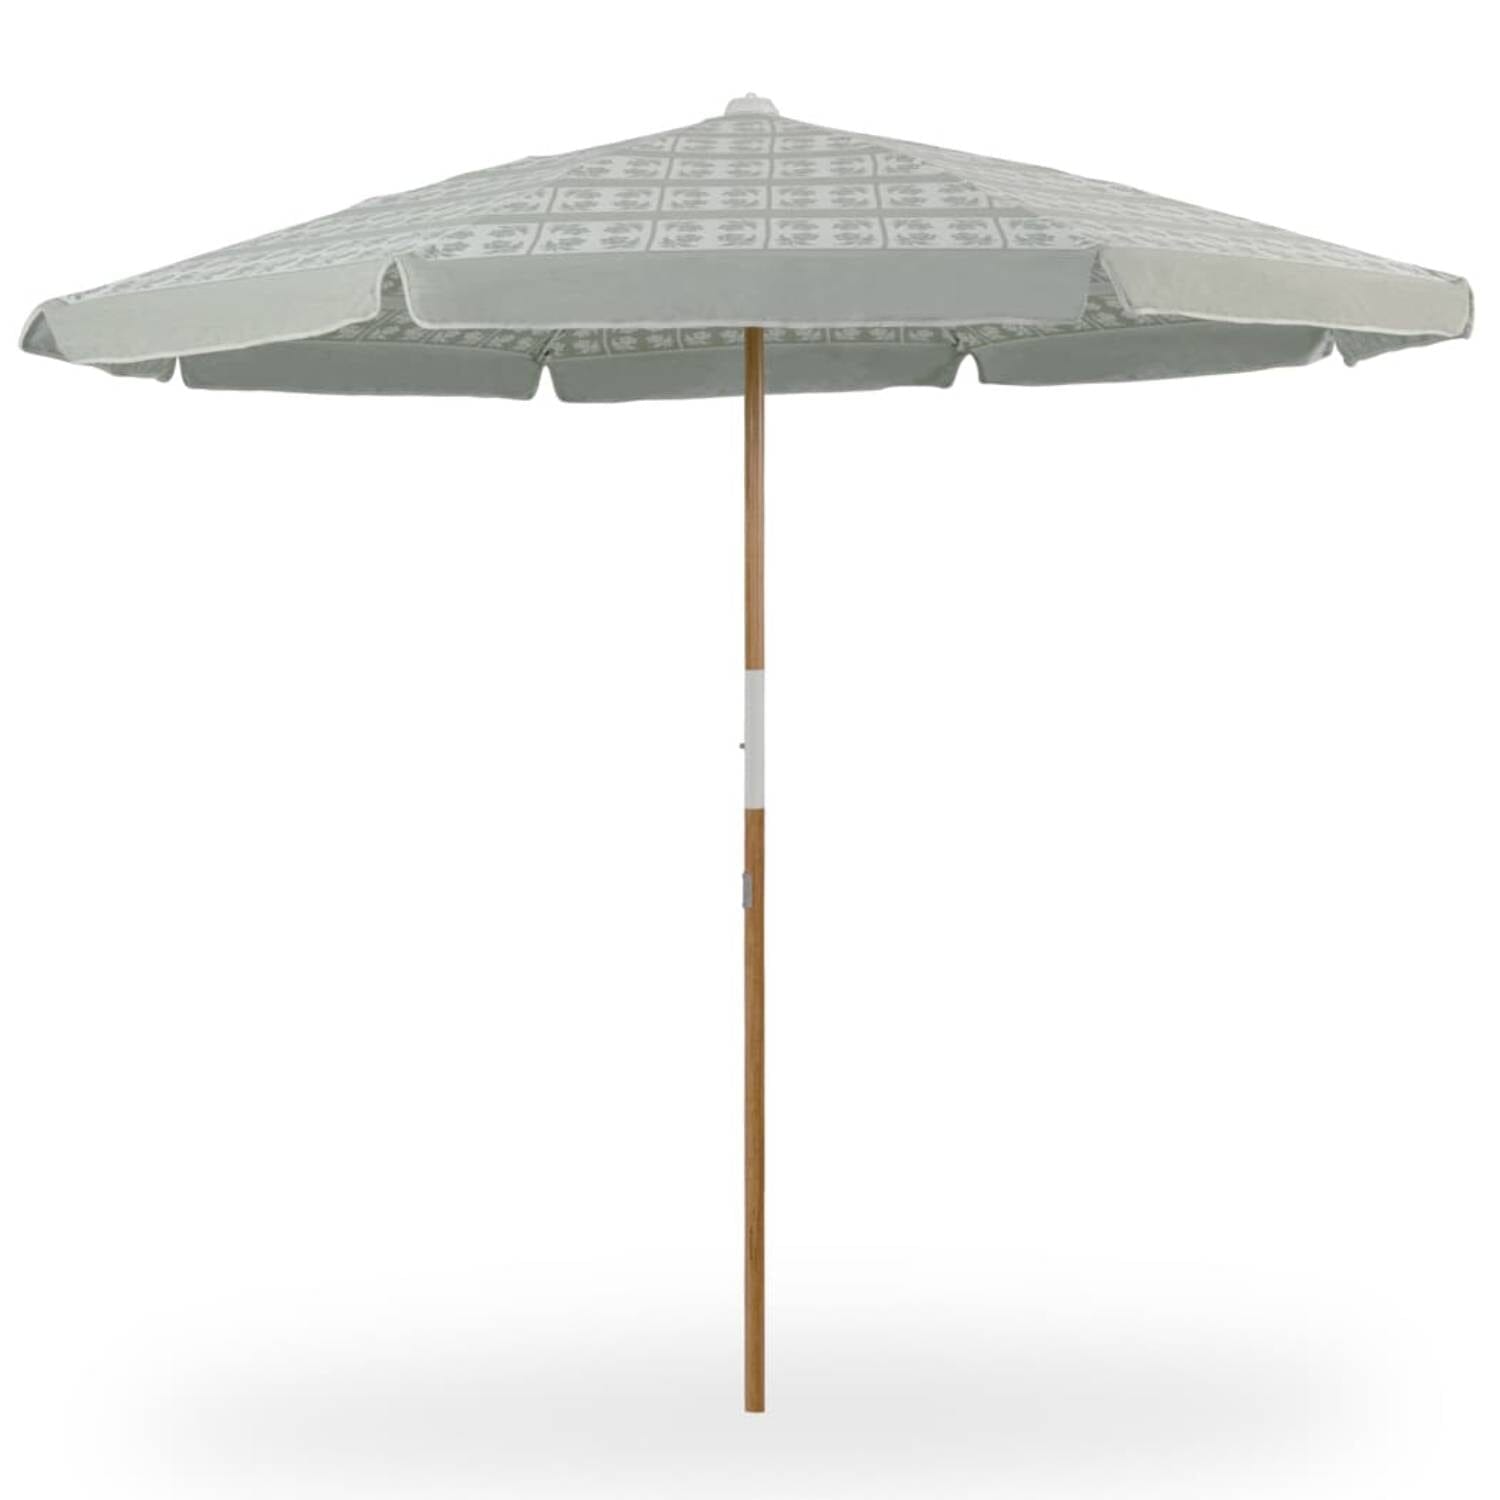 Studio image of amalfi umbrella